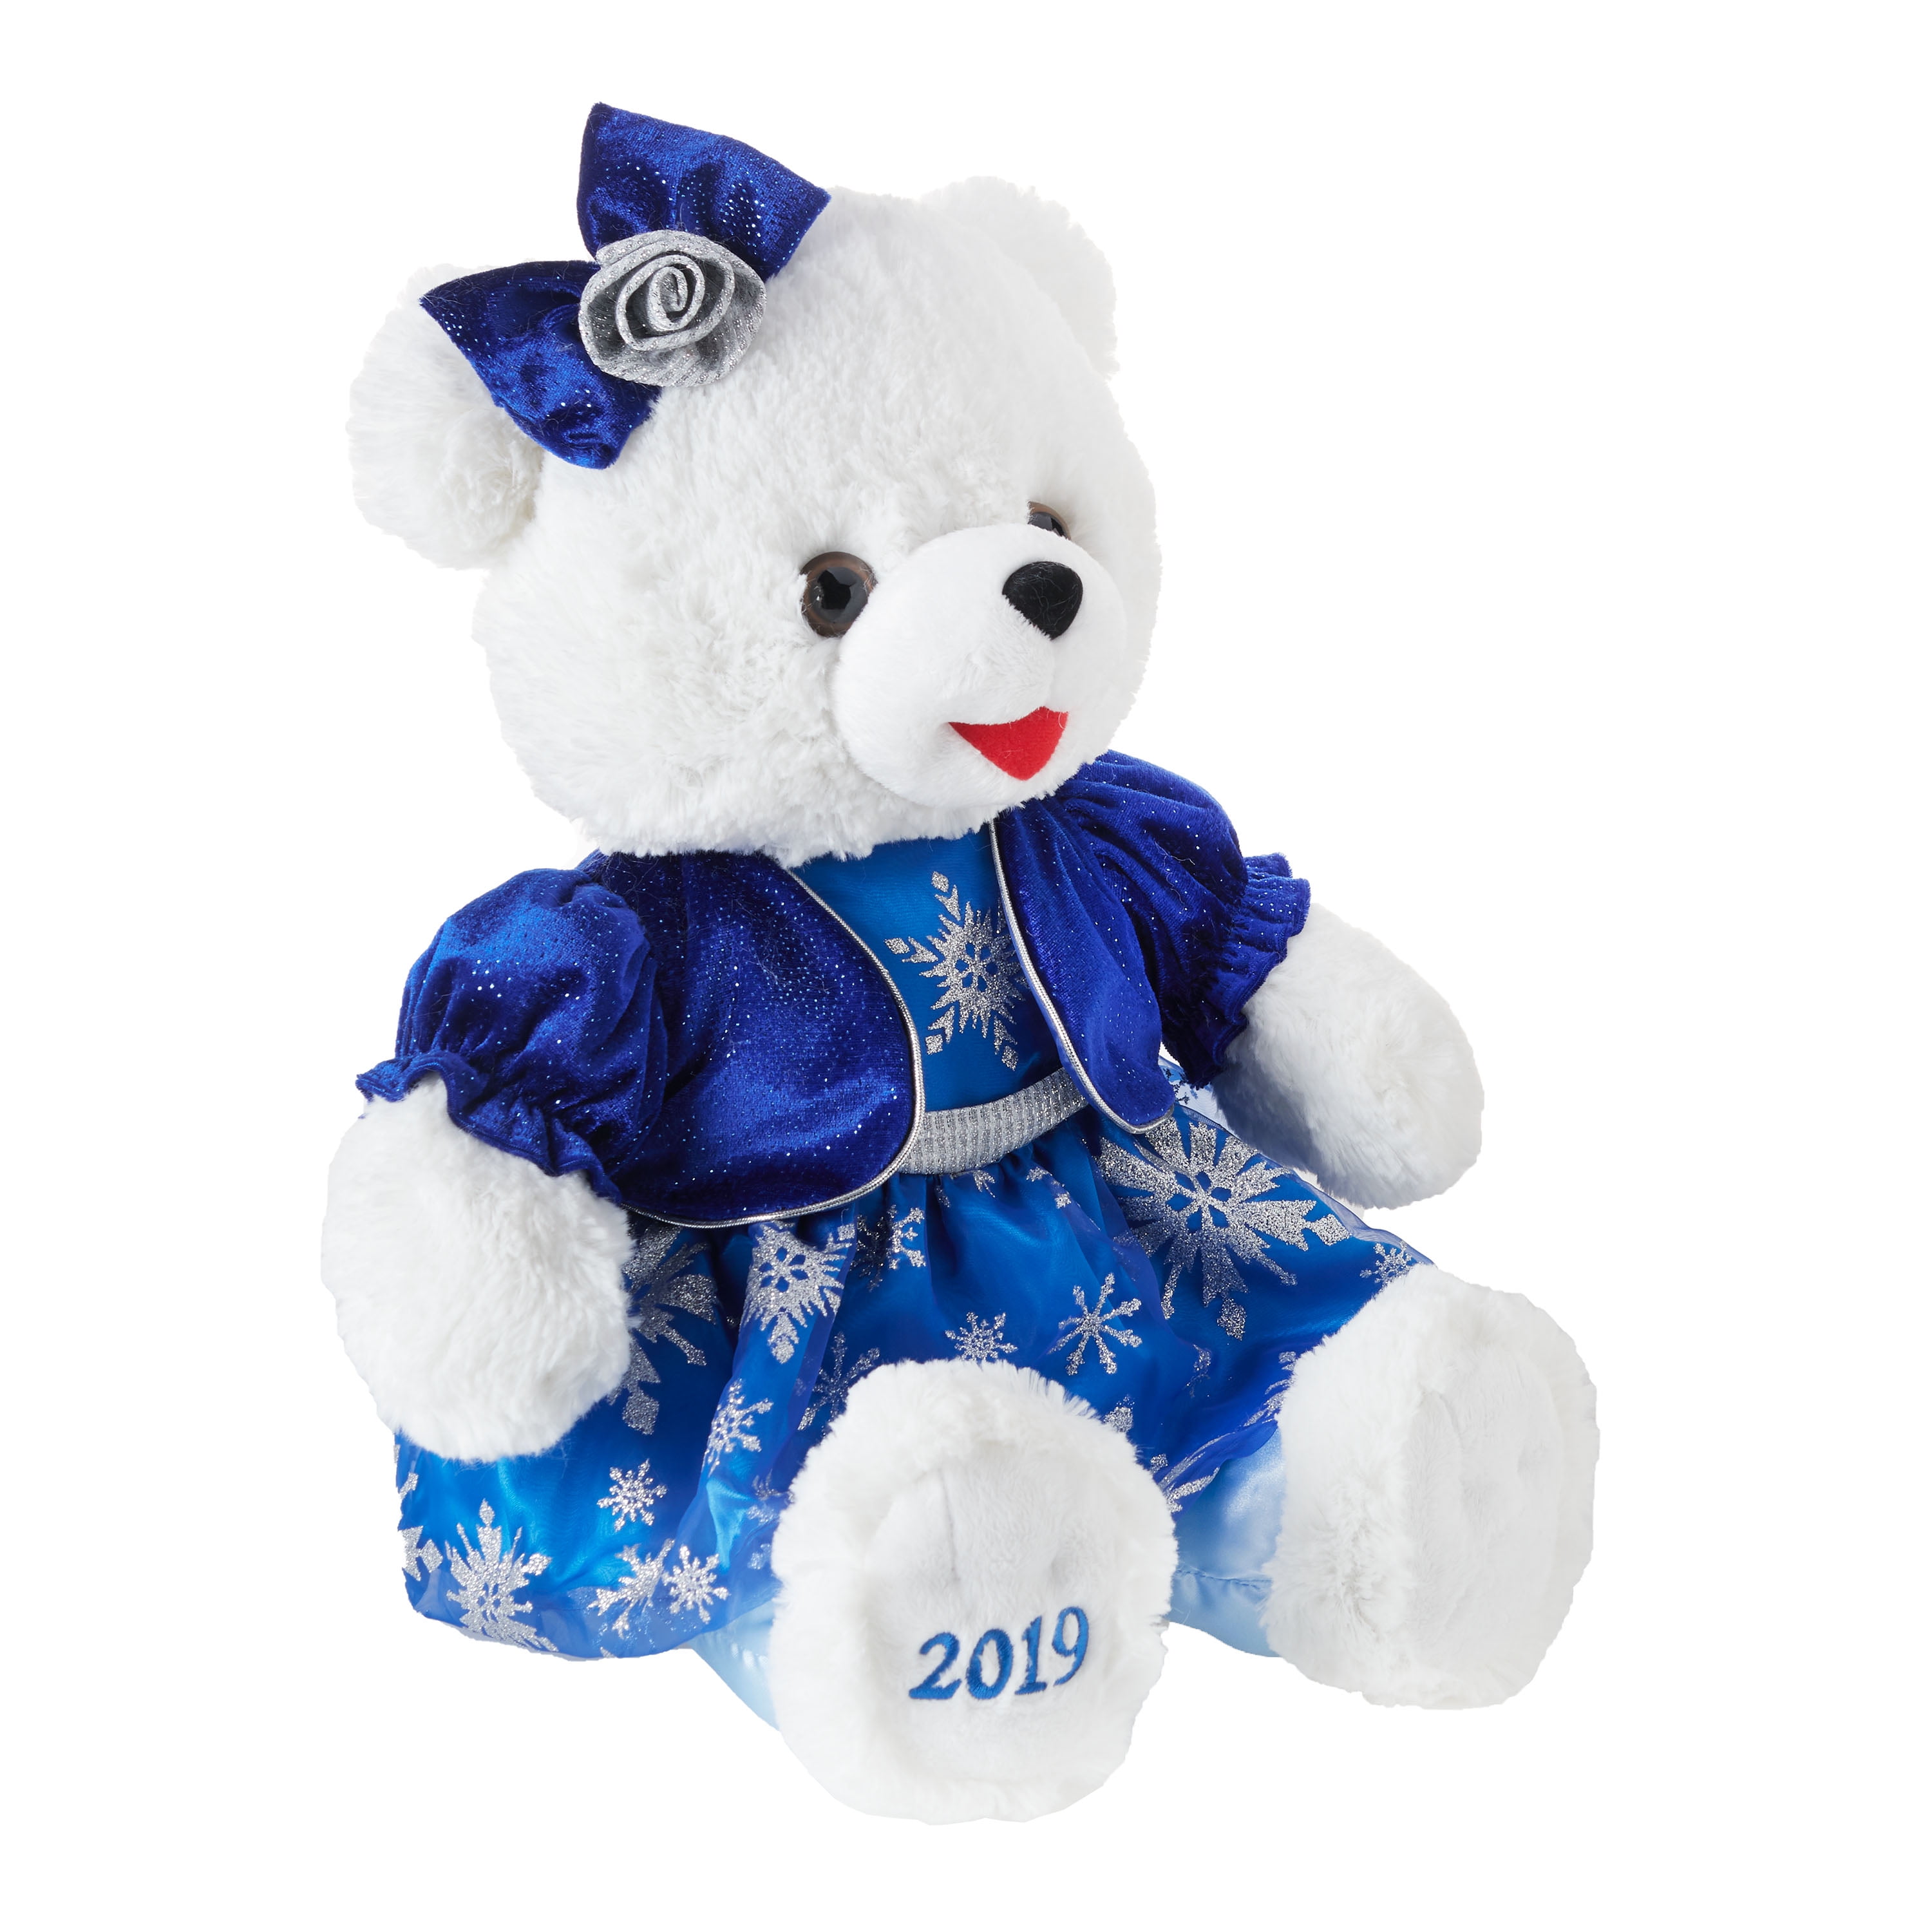 2019 WalMART CHRISTMAS Snowflake TEDDY BEAR White Boy 13" Hot Blue Outfit NWT 